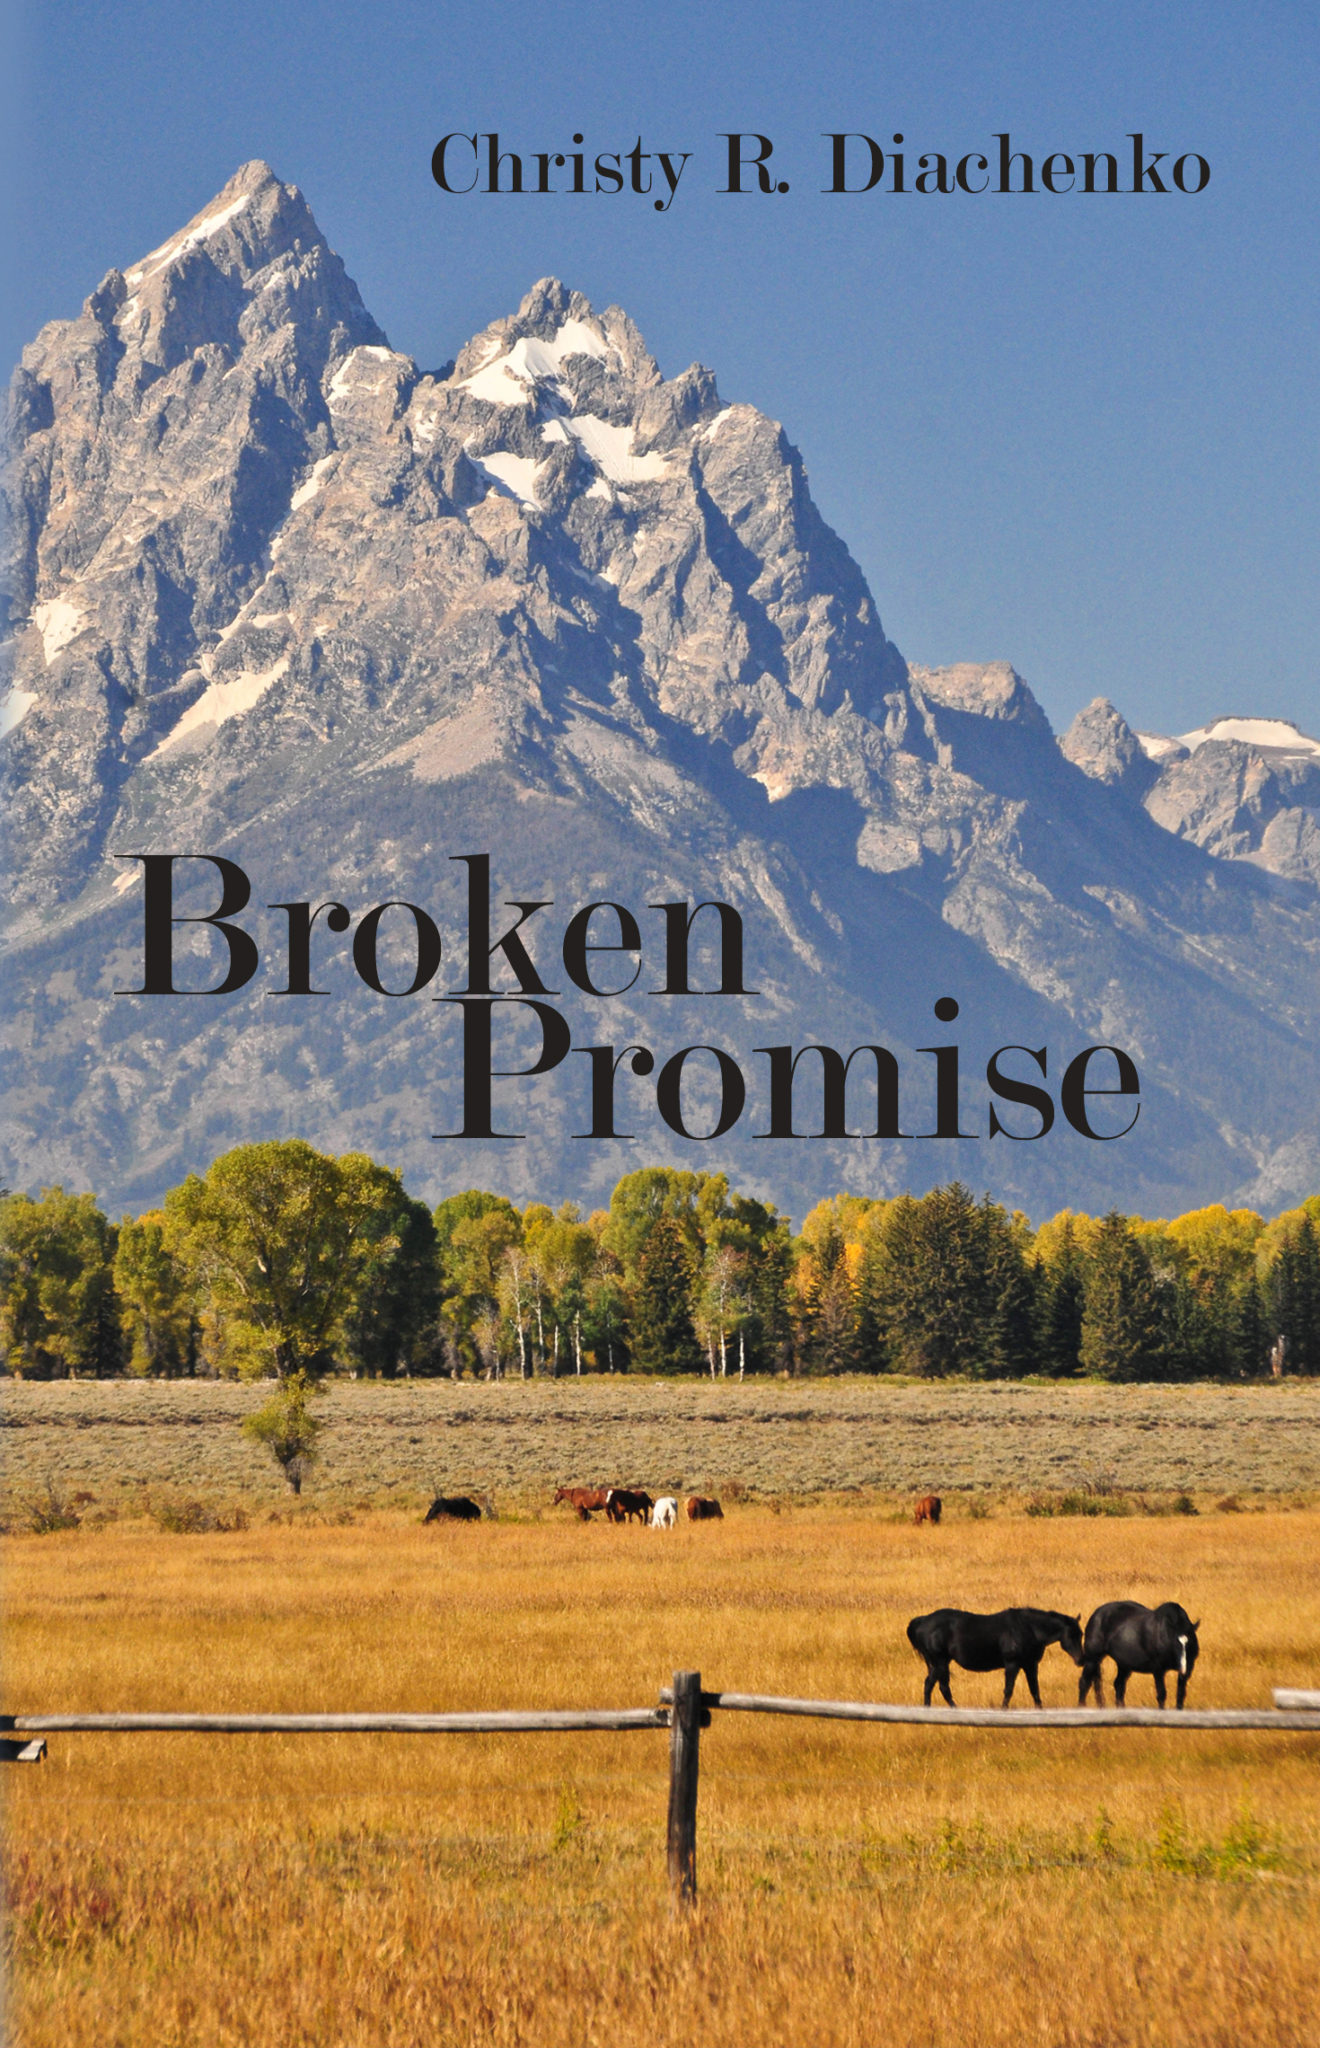 Broken Promise by Christy R. Diachenko